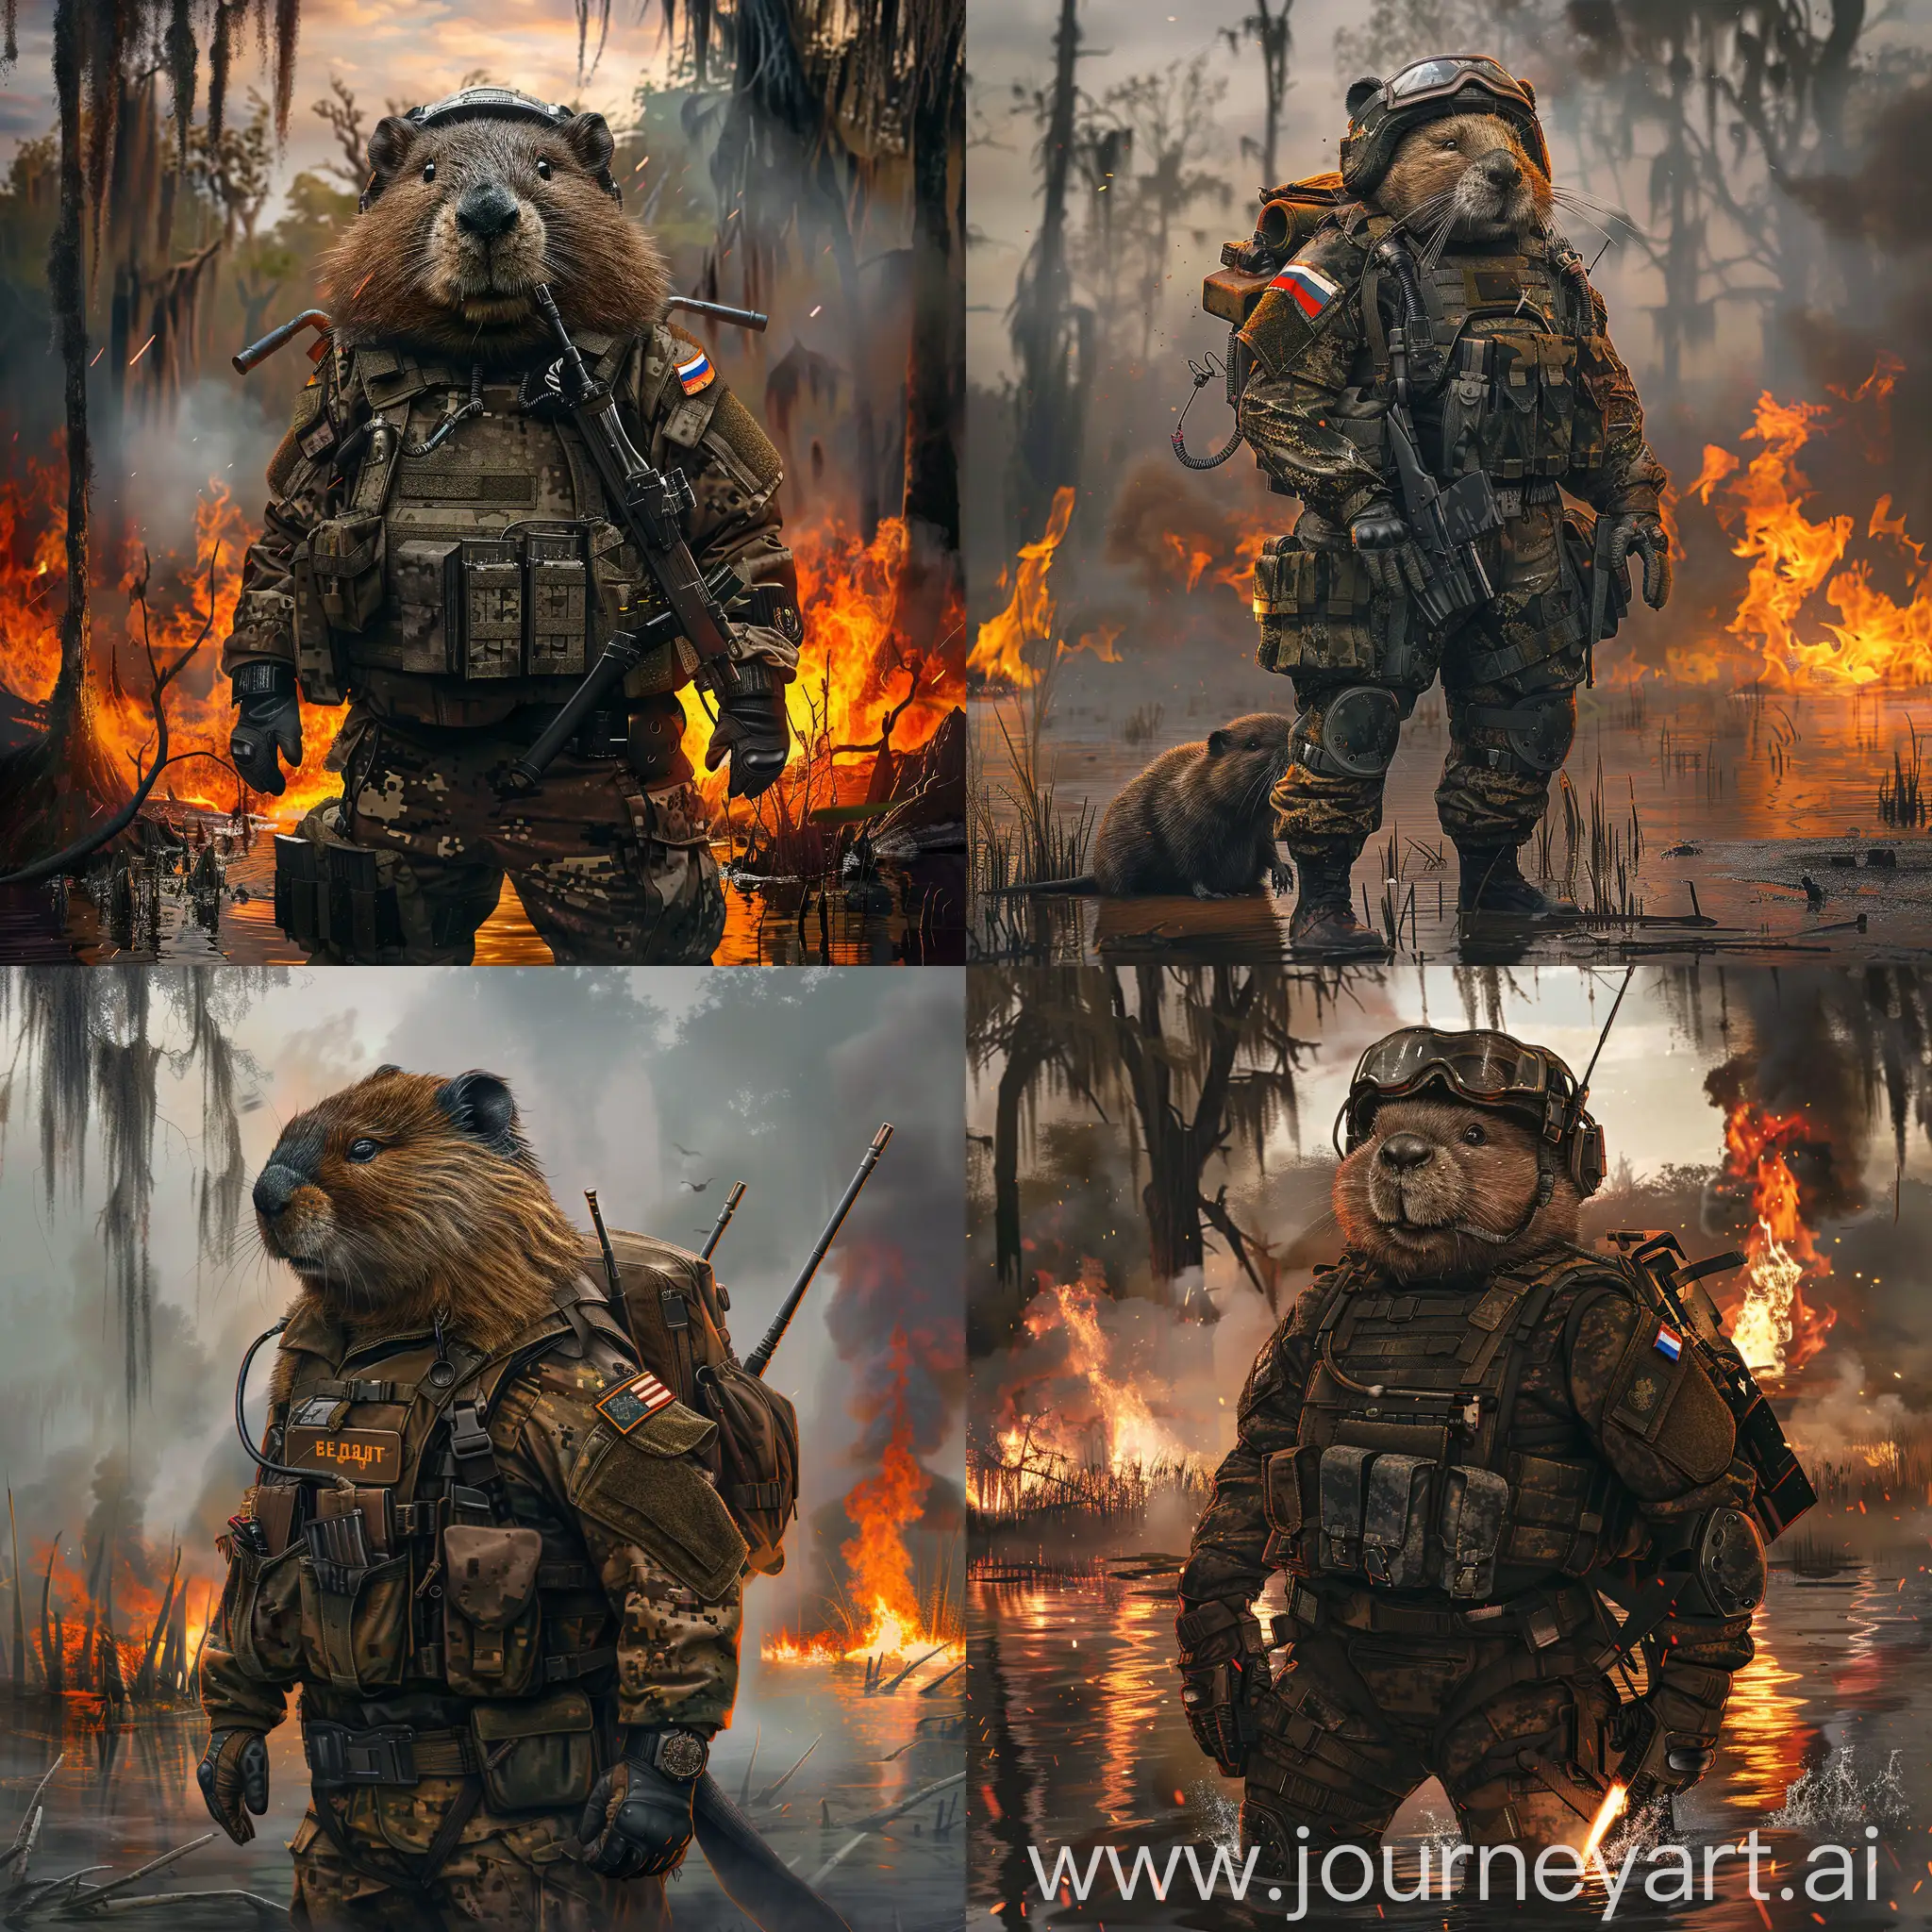 BEAVER-Private-Military-Company-RussianUniformed-Beaver-Amid-Louisiana-Swamp-Fire